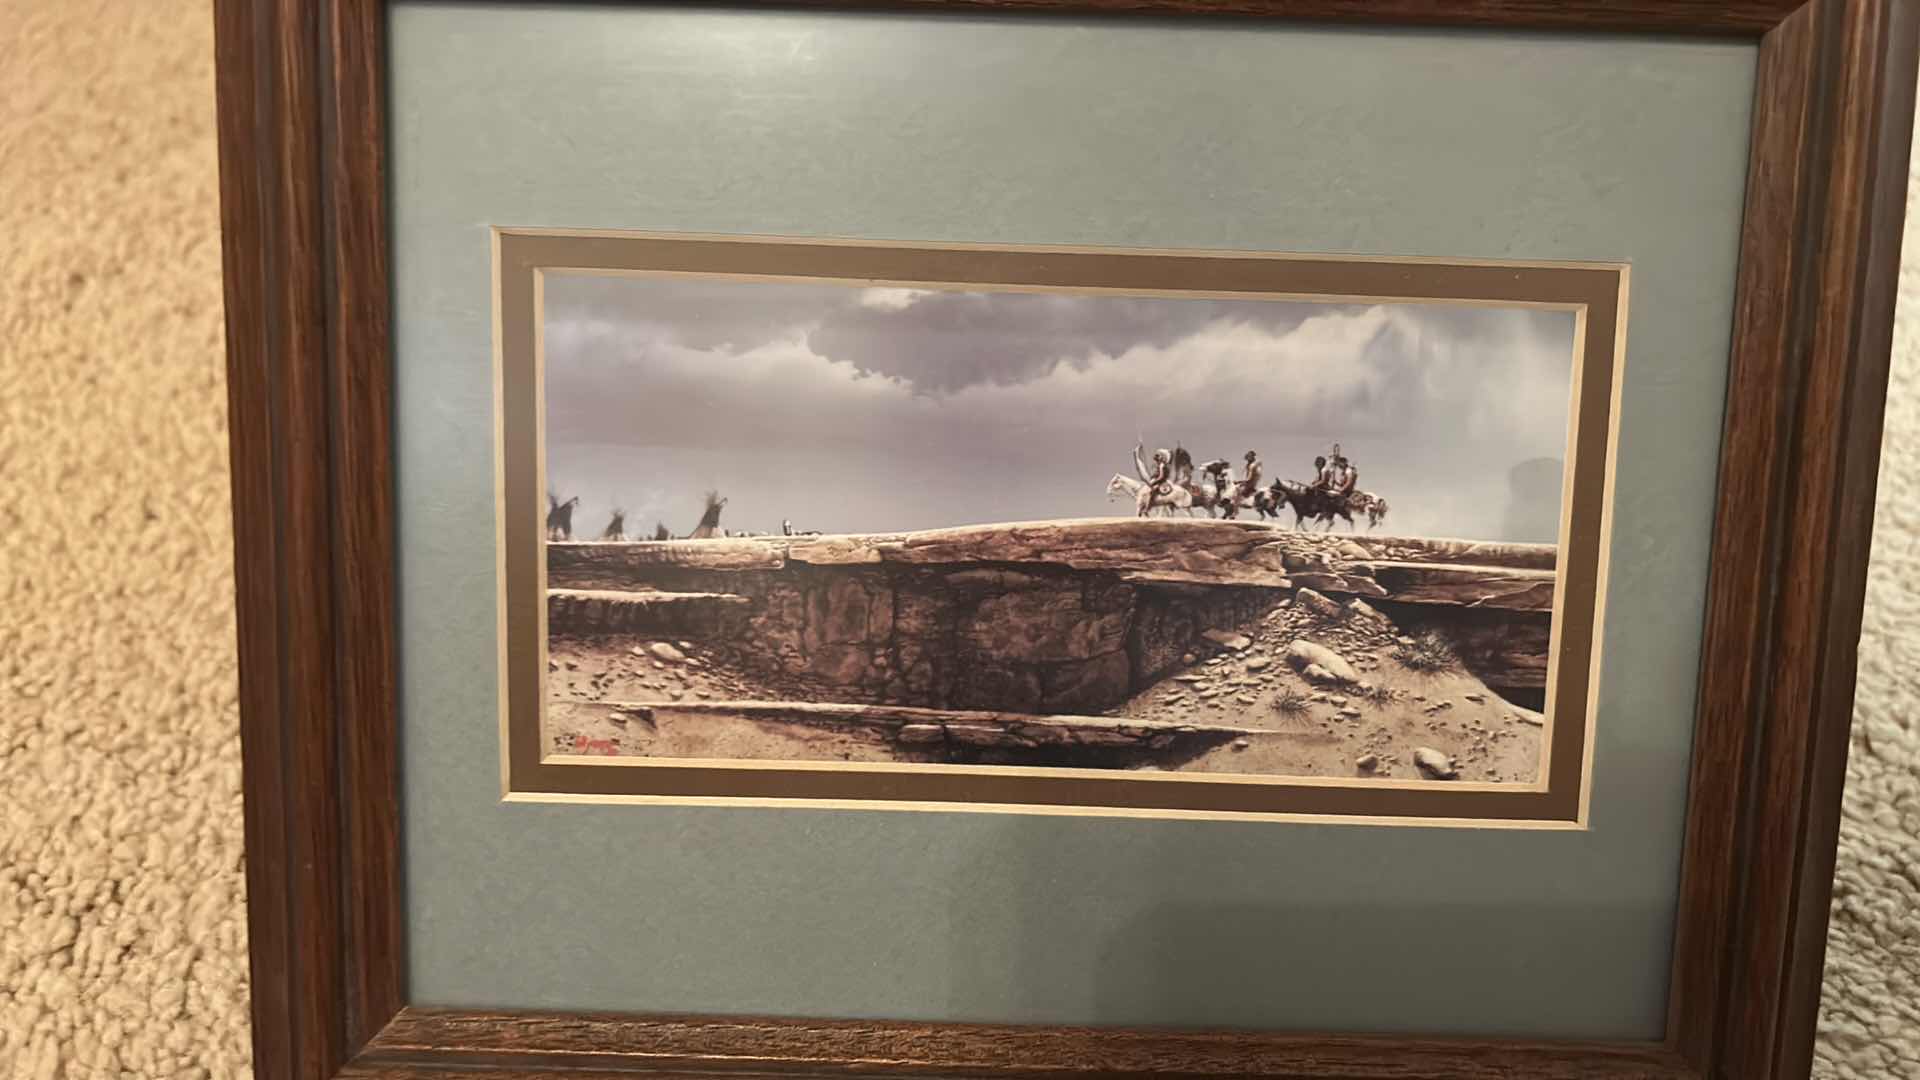 Photo 3 of 2 - 11“ x 9“ framed artwork, "Return of the Warriors" 1980 & "Waiting for the captain" 1980